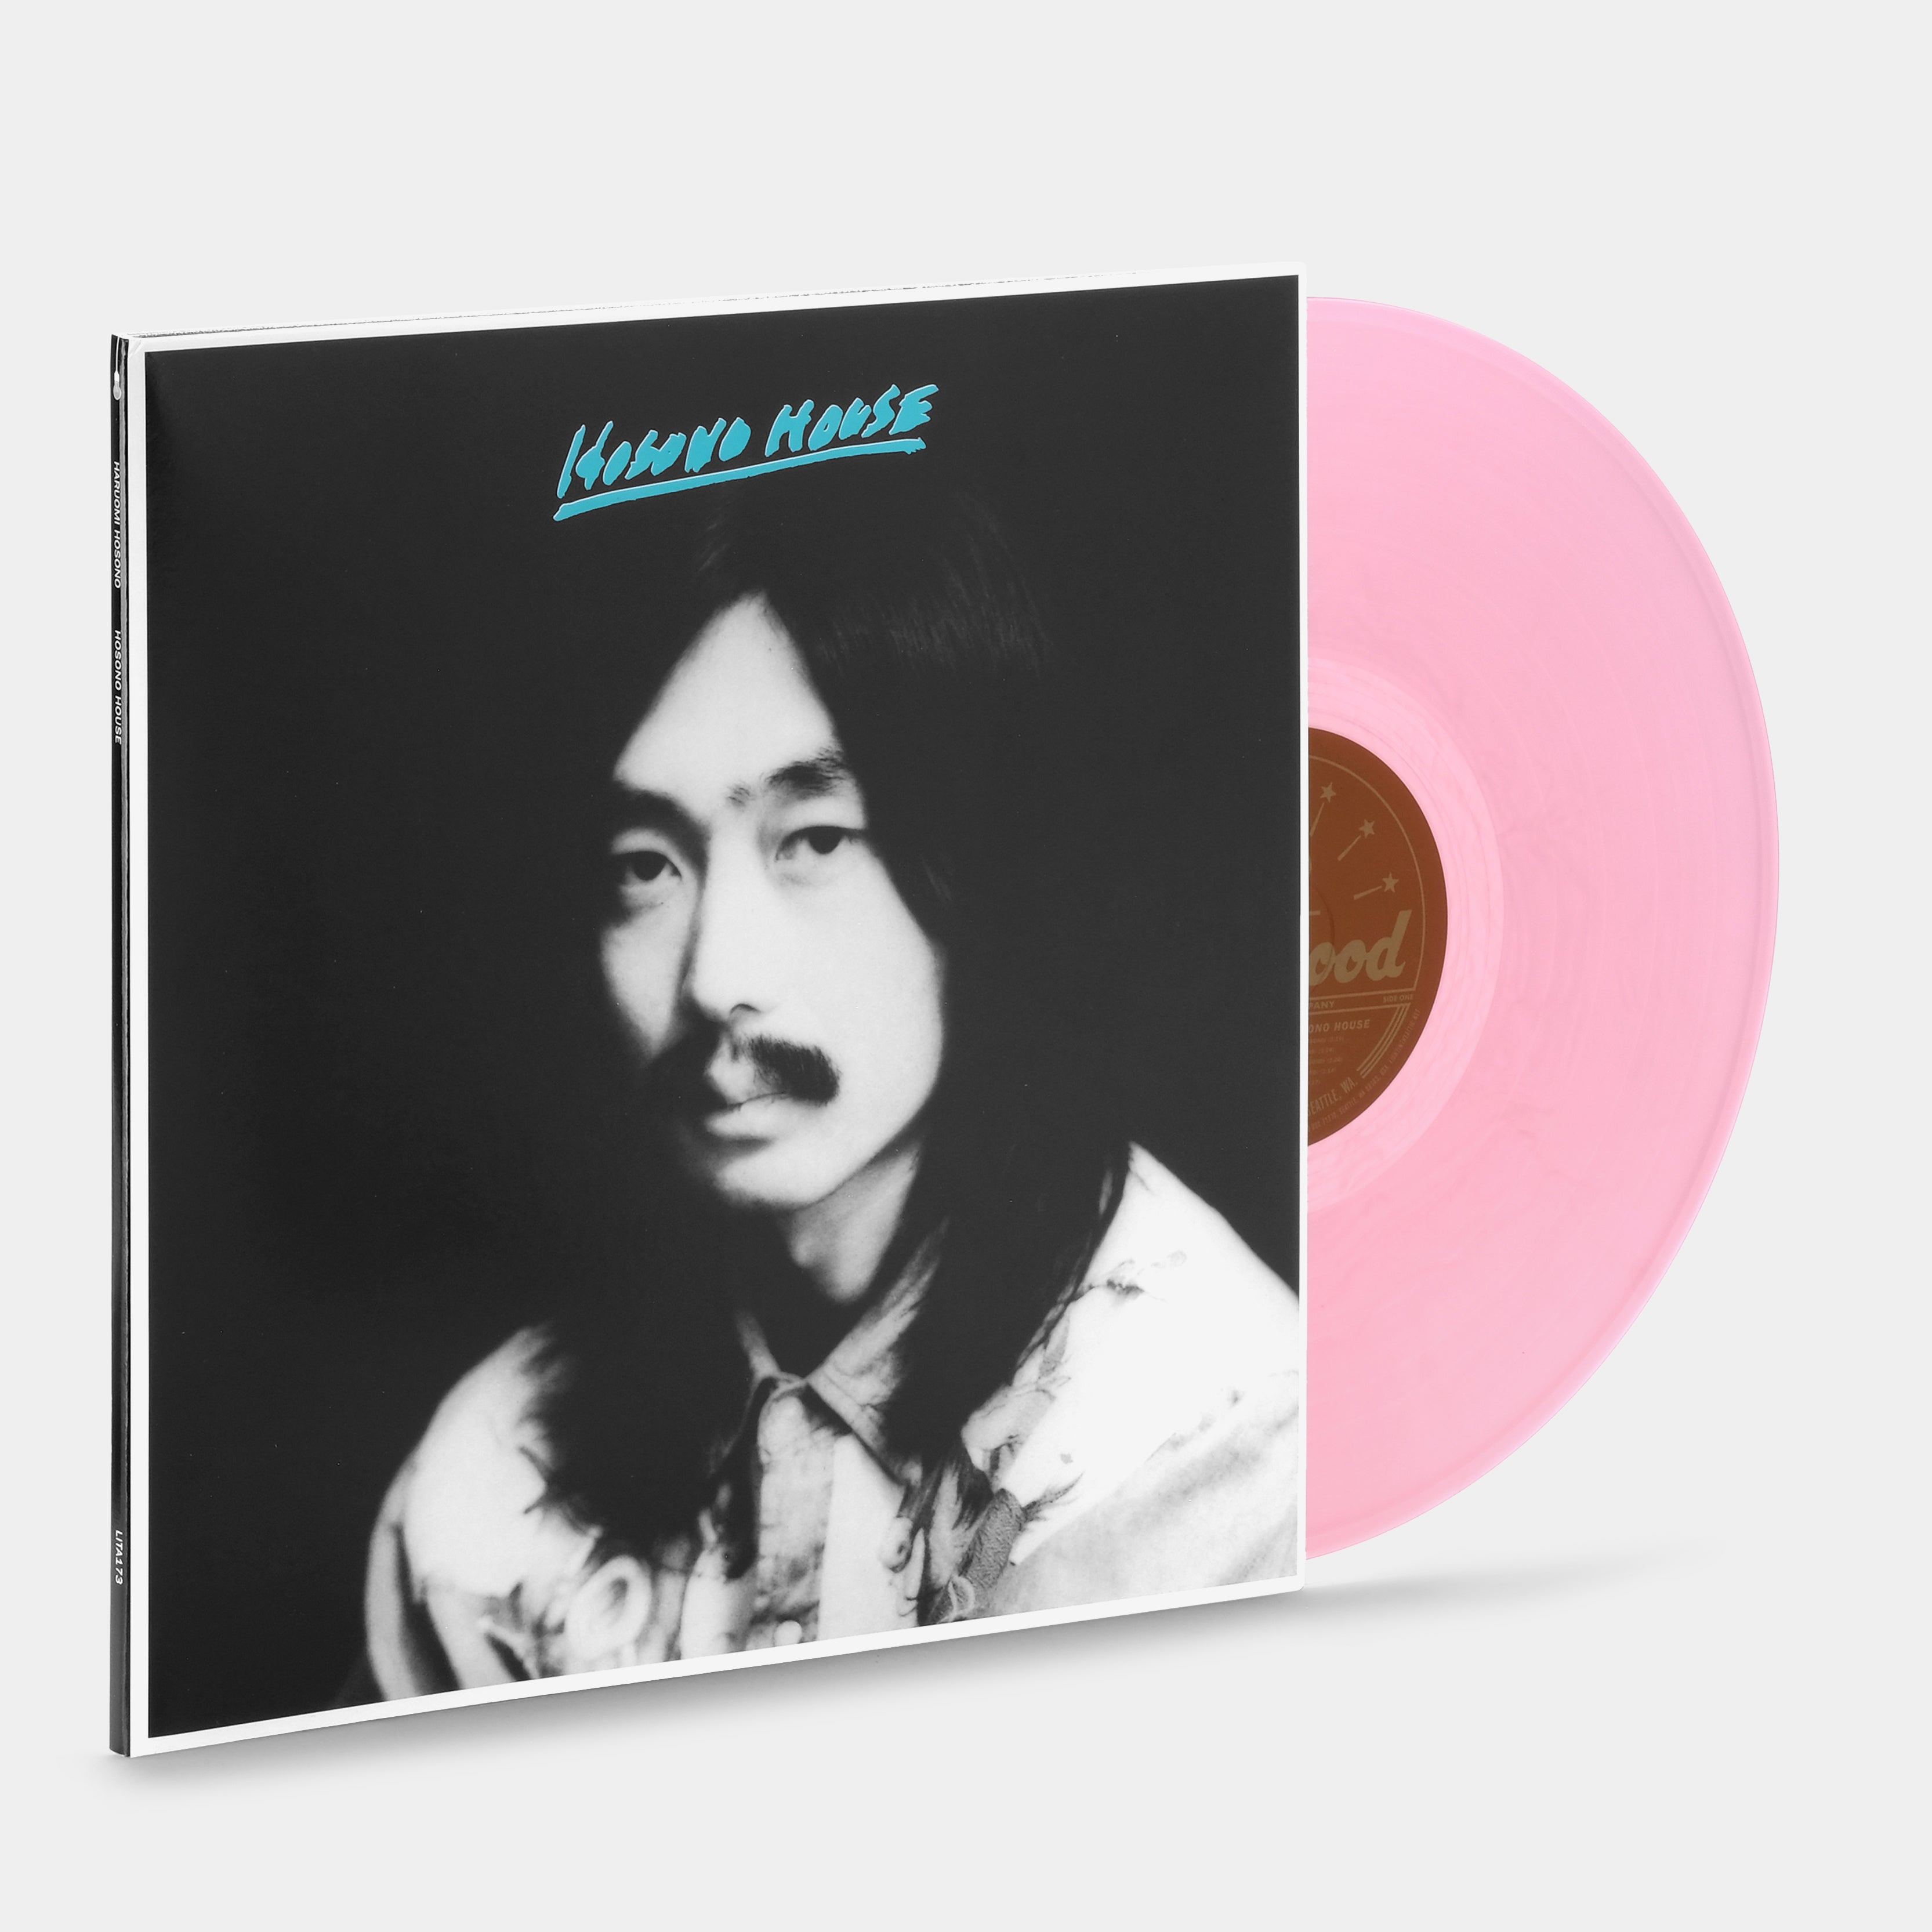 Haruomi Hosono - Hosono House LP Translucent Pink Glass Vinyl Record